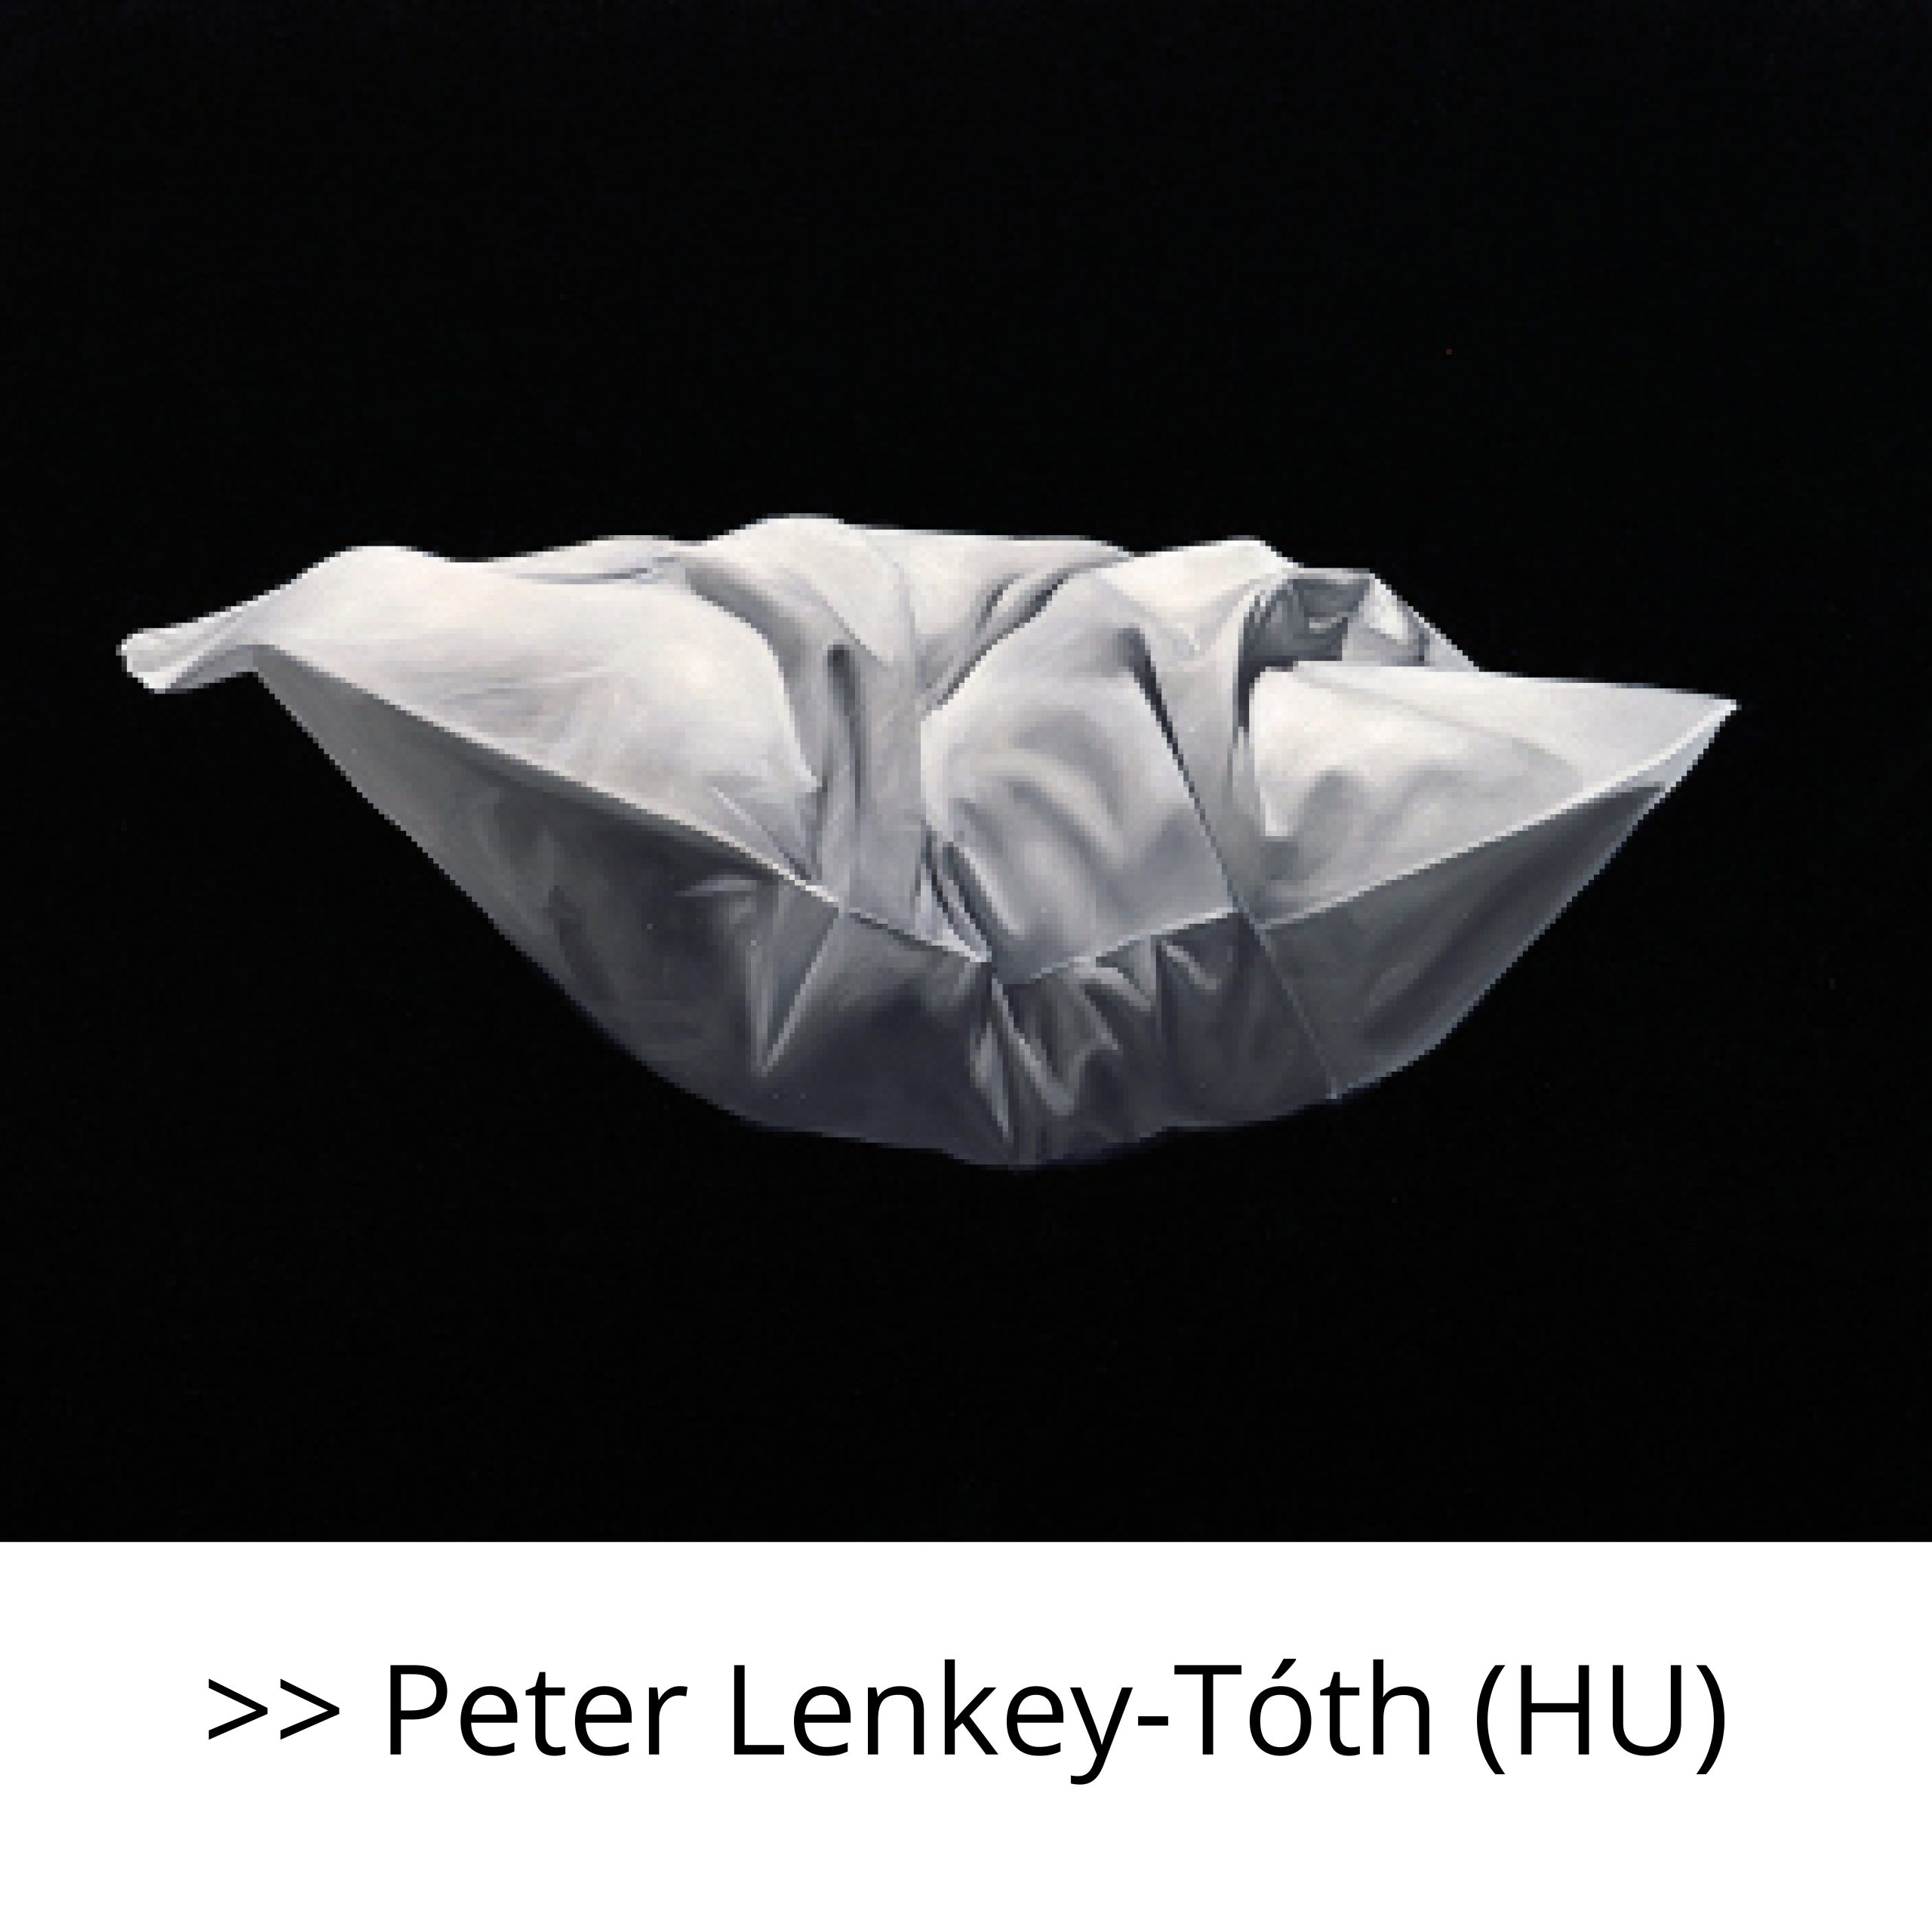 PETER LENKEY-TOTH (HU)